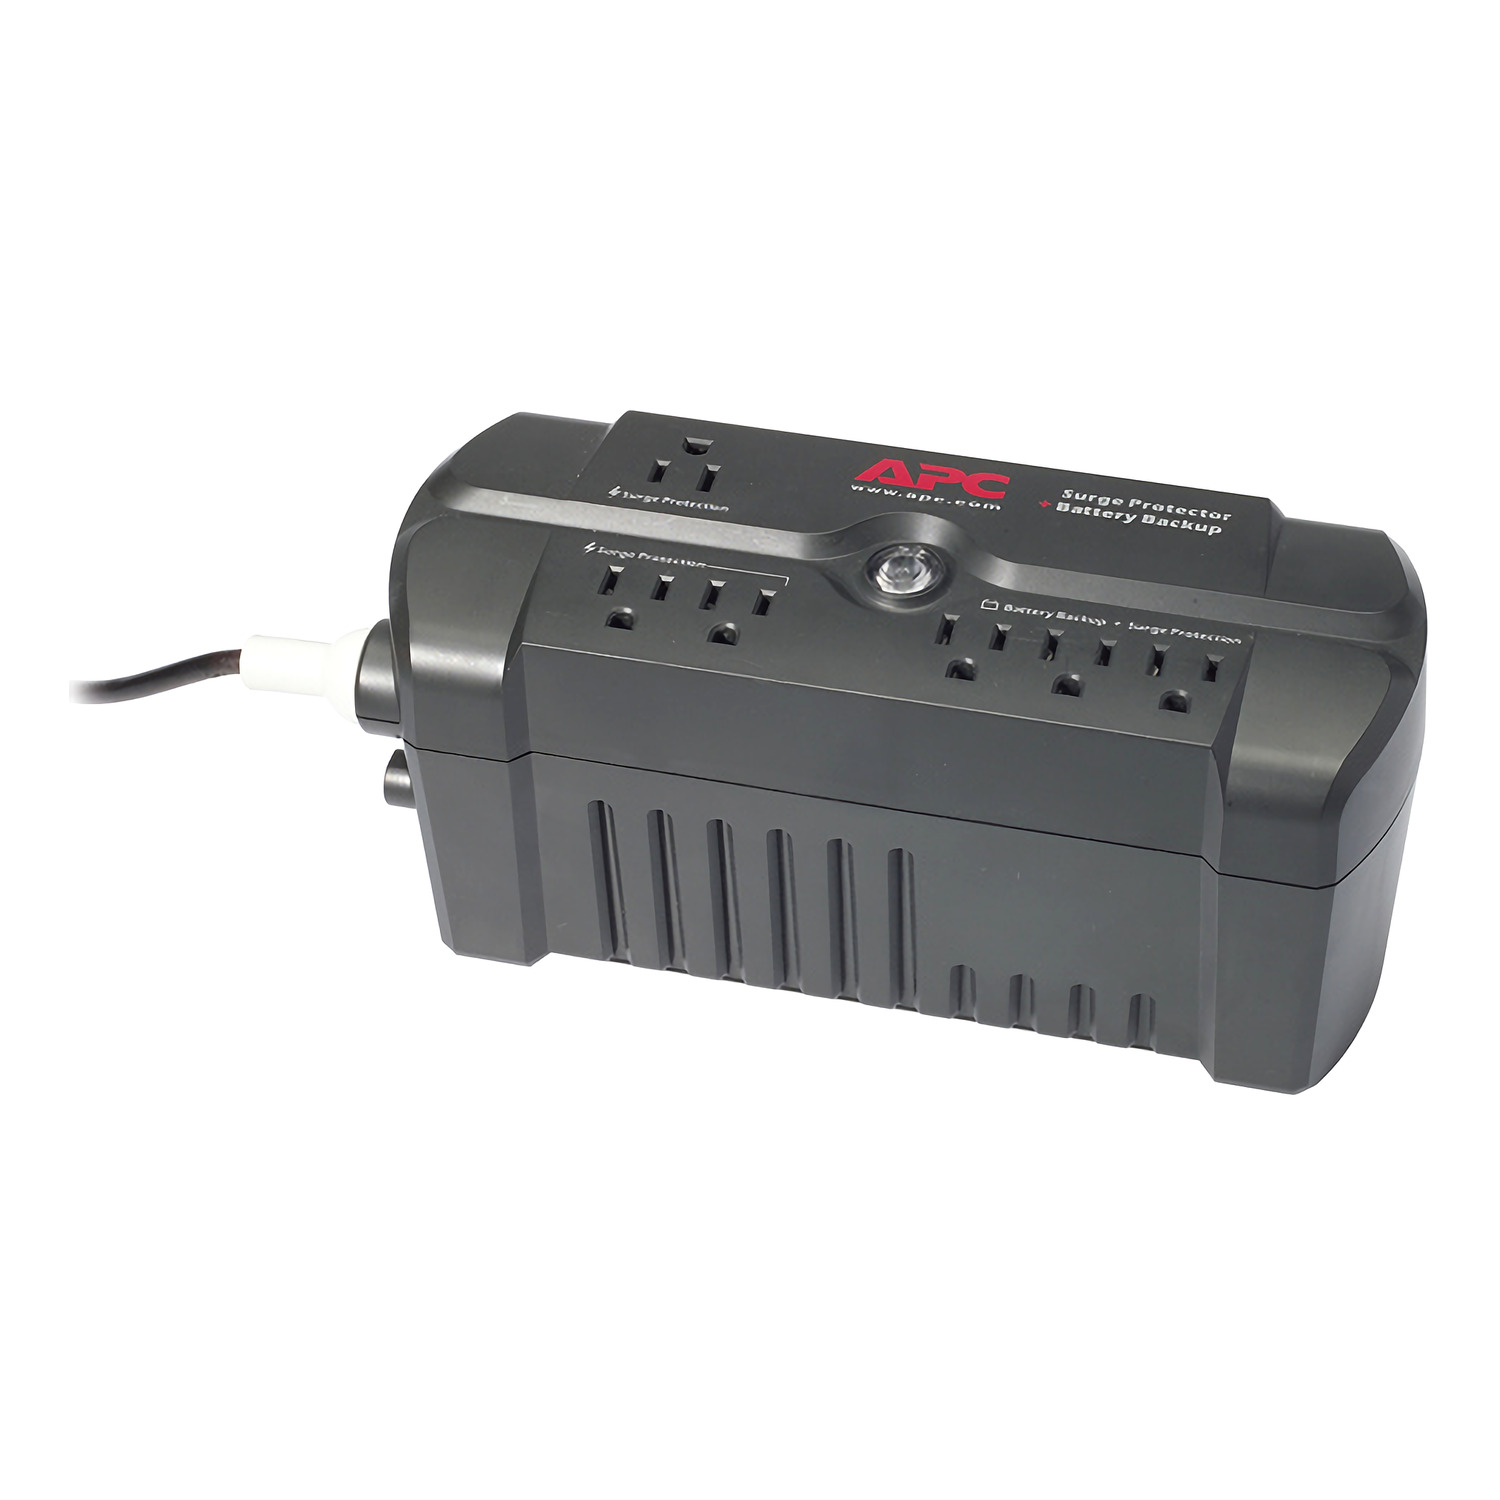 APC Back-UPS ES 325, Surge Protector + Battery Backup, 325VA